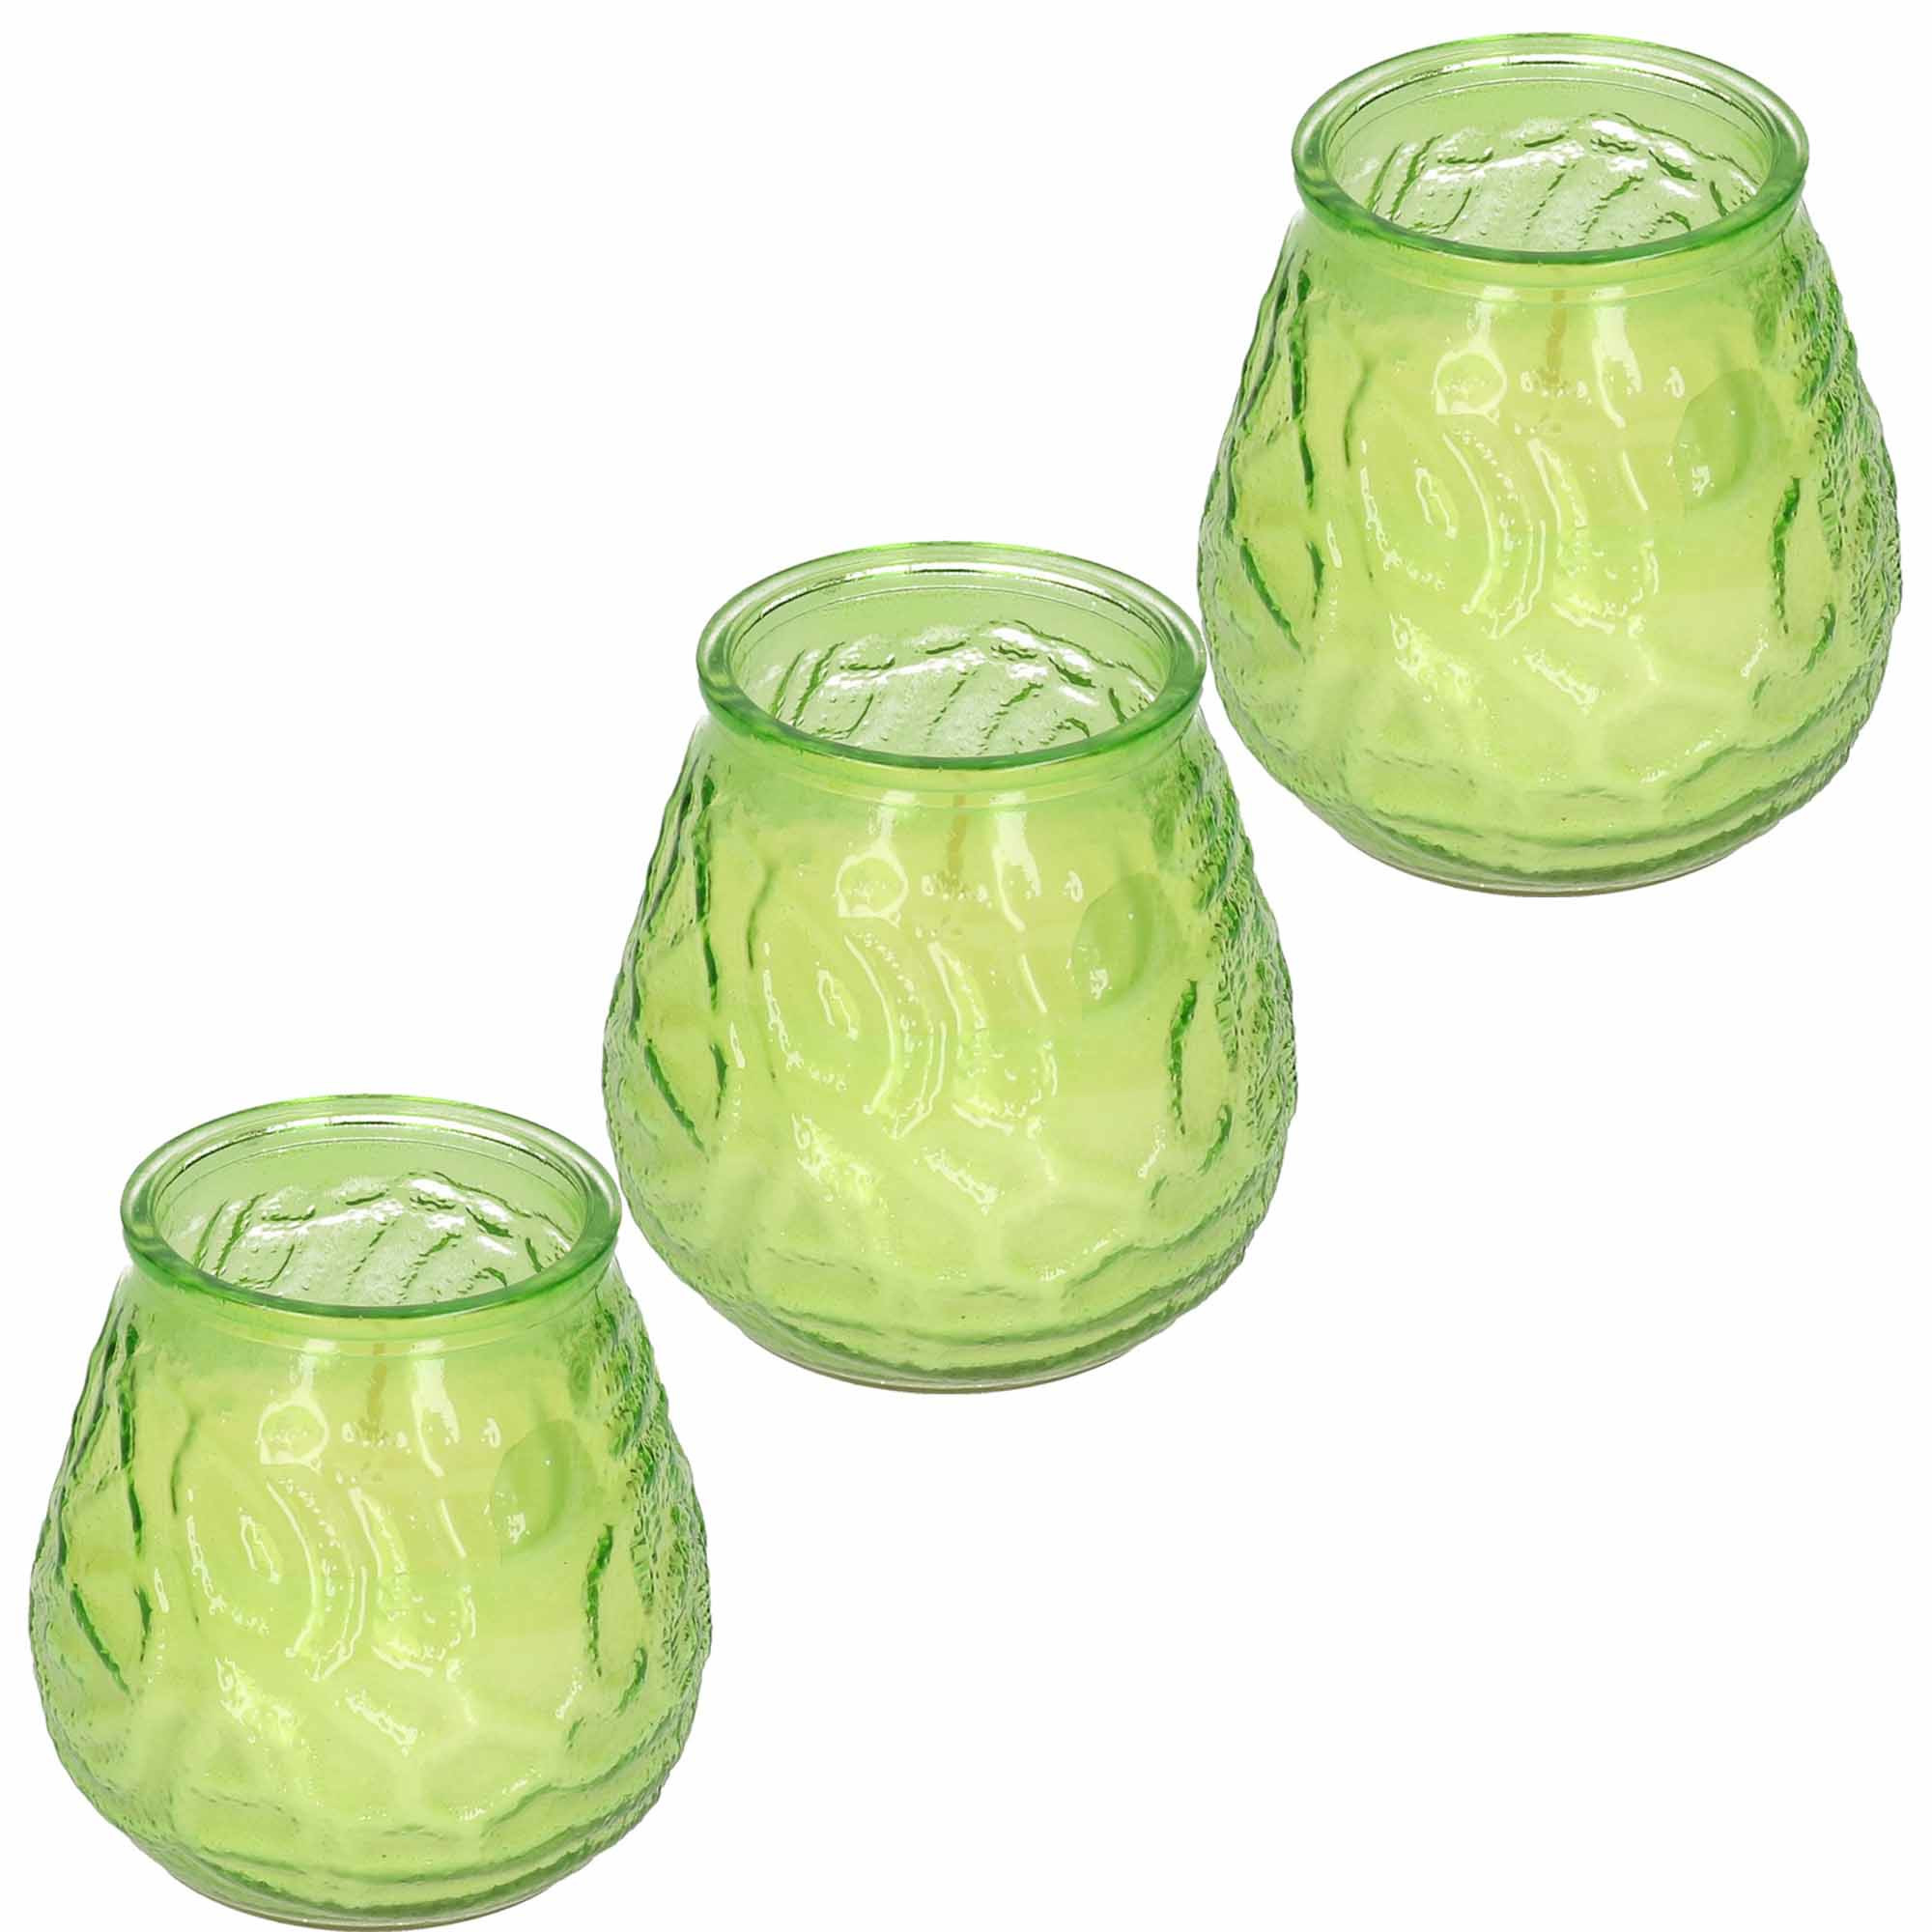 Windlicht geurkaars 3x groen glas 48 branduren citrusgeur